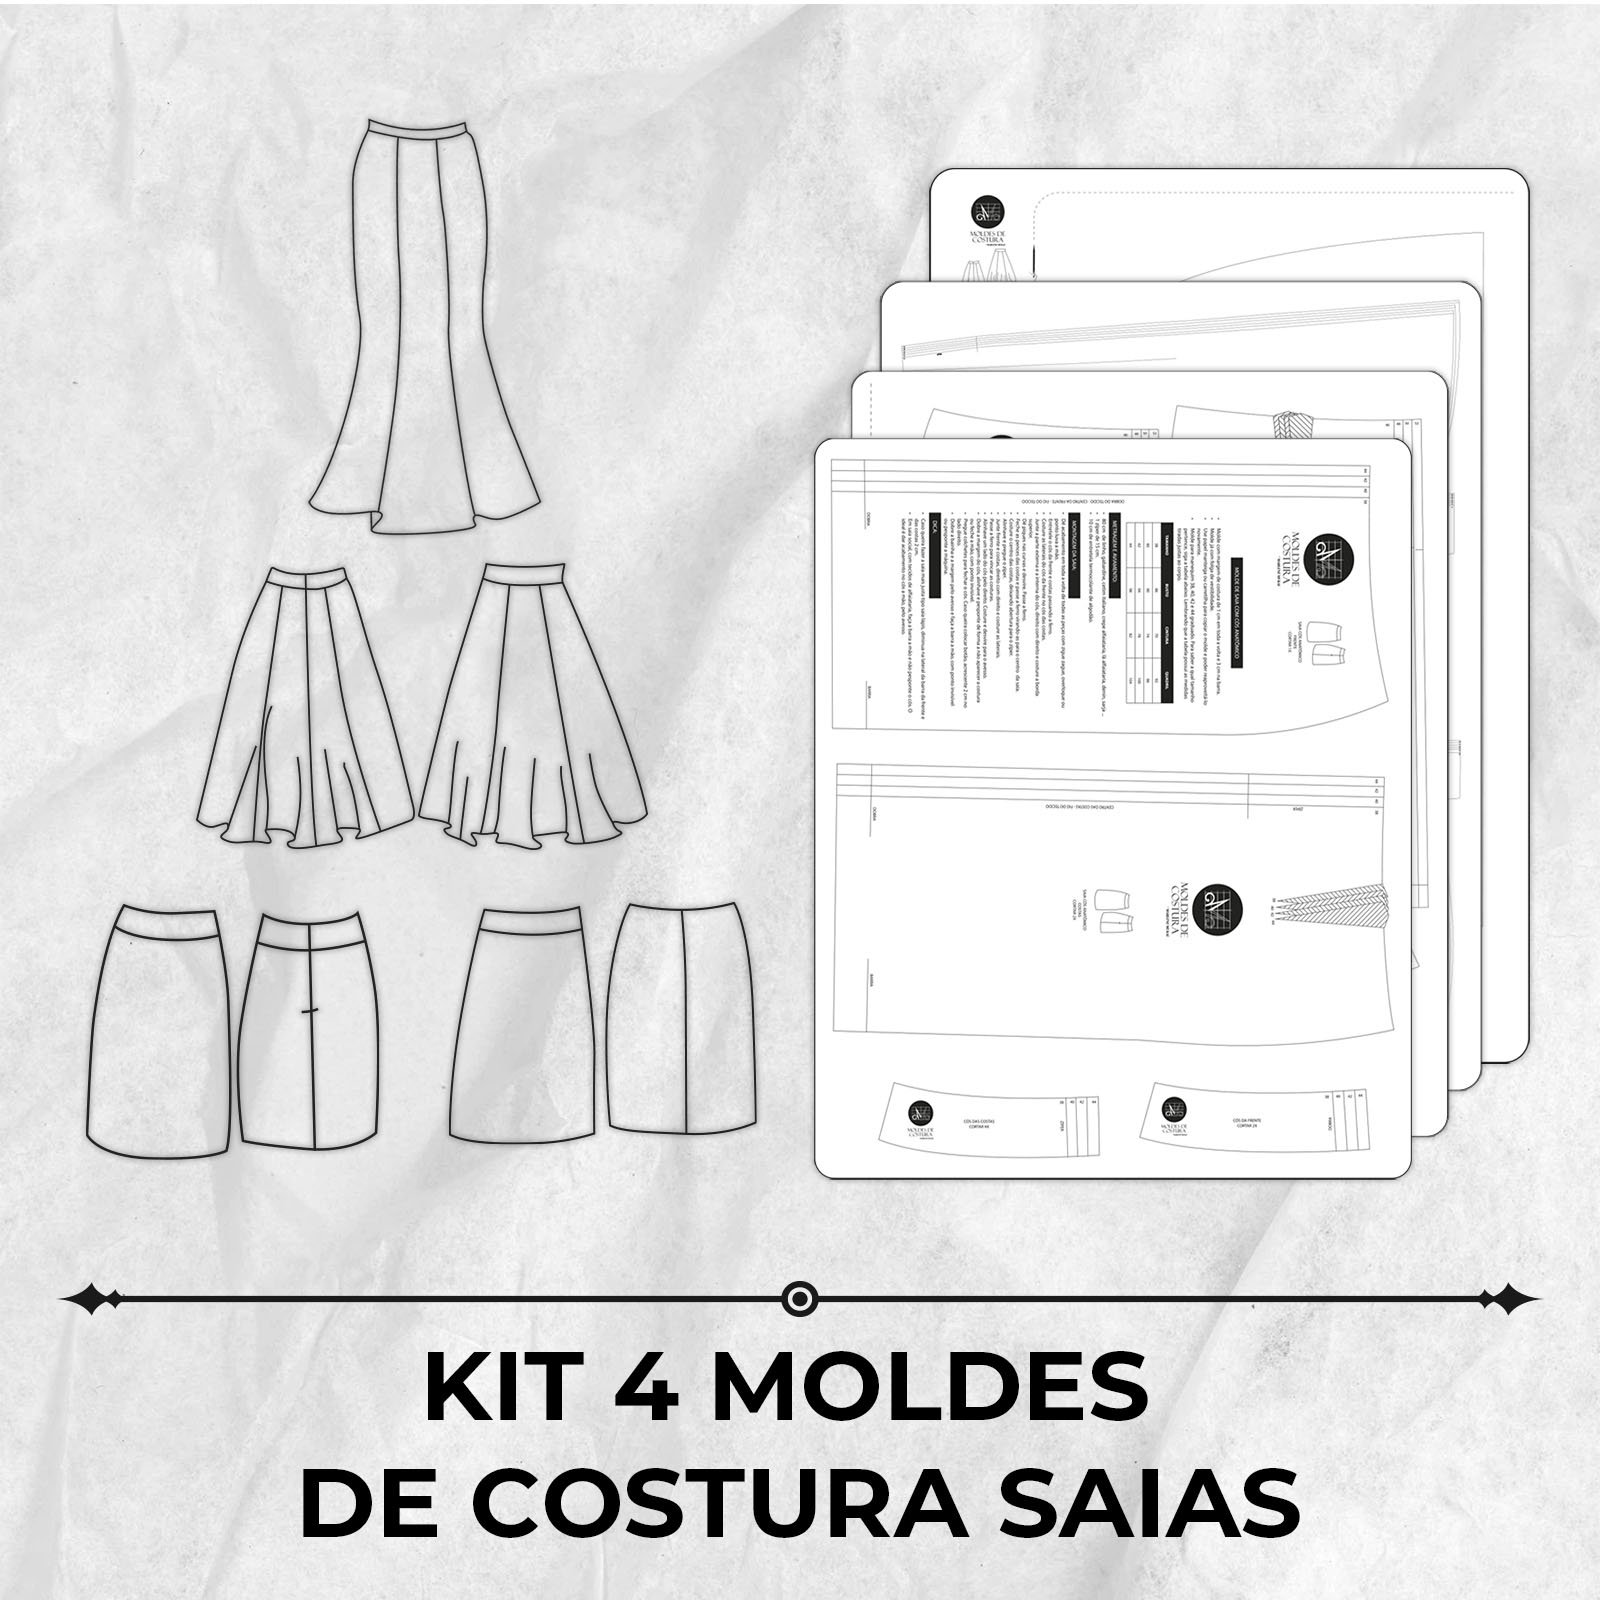 Kit 4 moldes de costura saias by Marlene Mukai